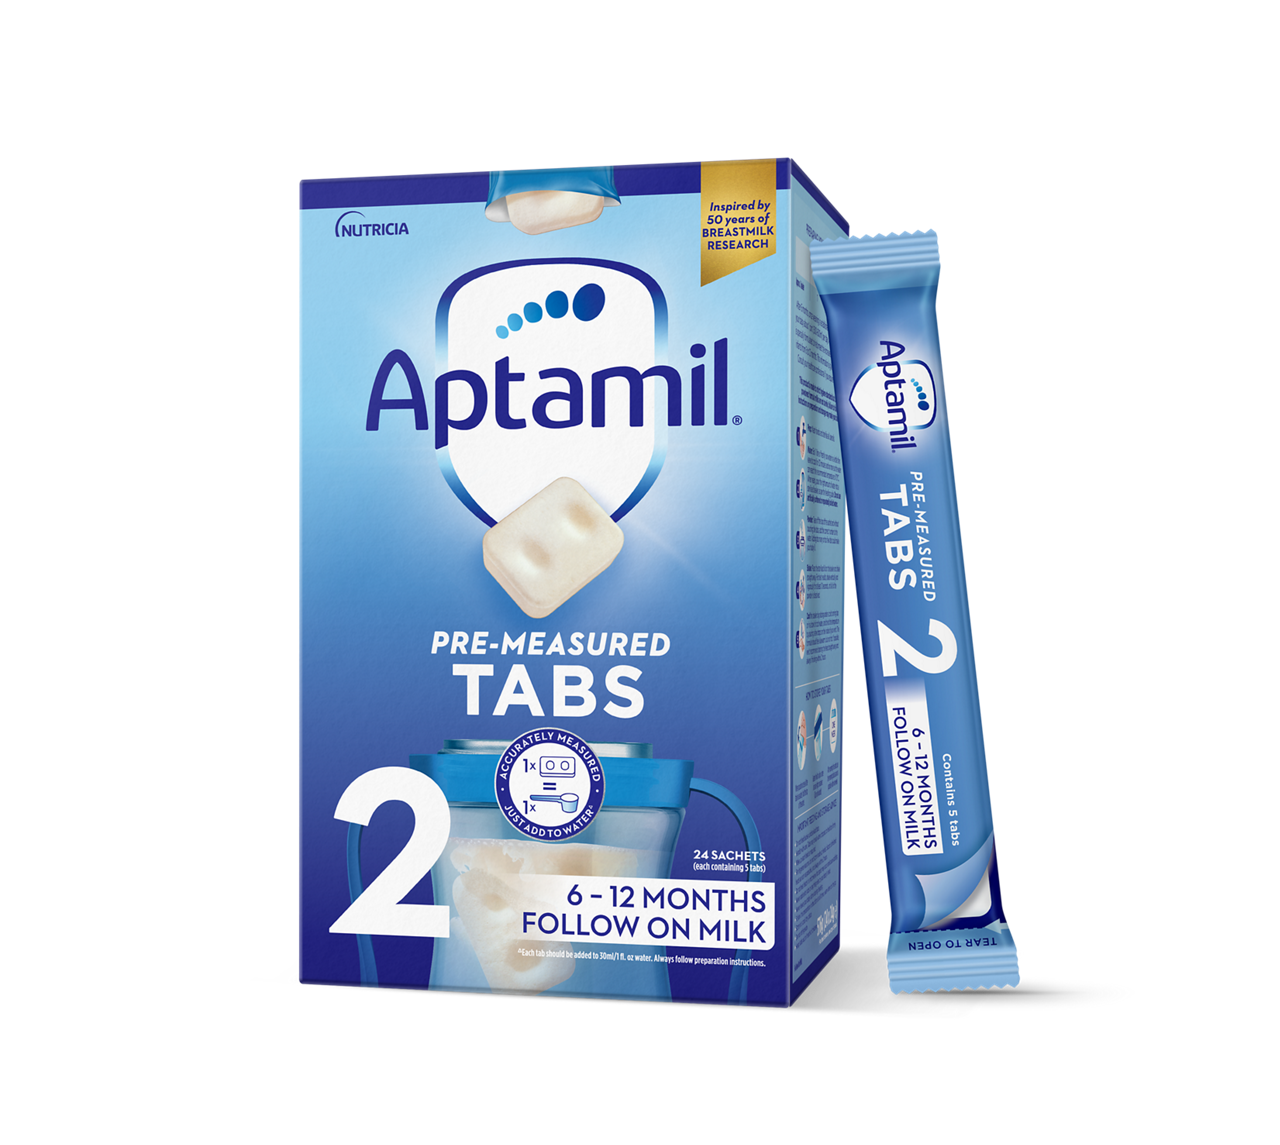 aptamil-tabs-fom-angled-with-sachet-optimised.png